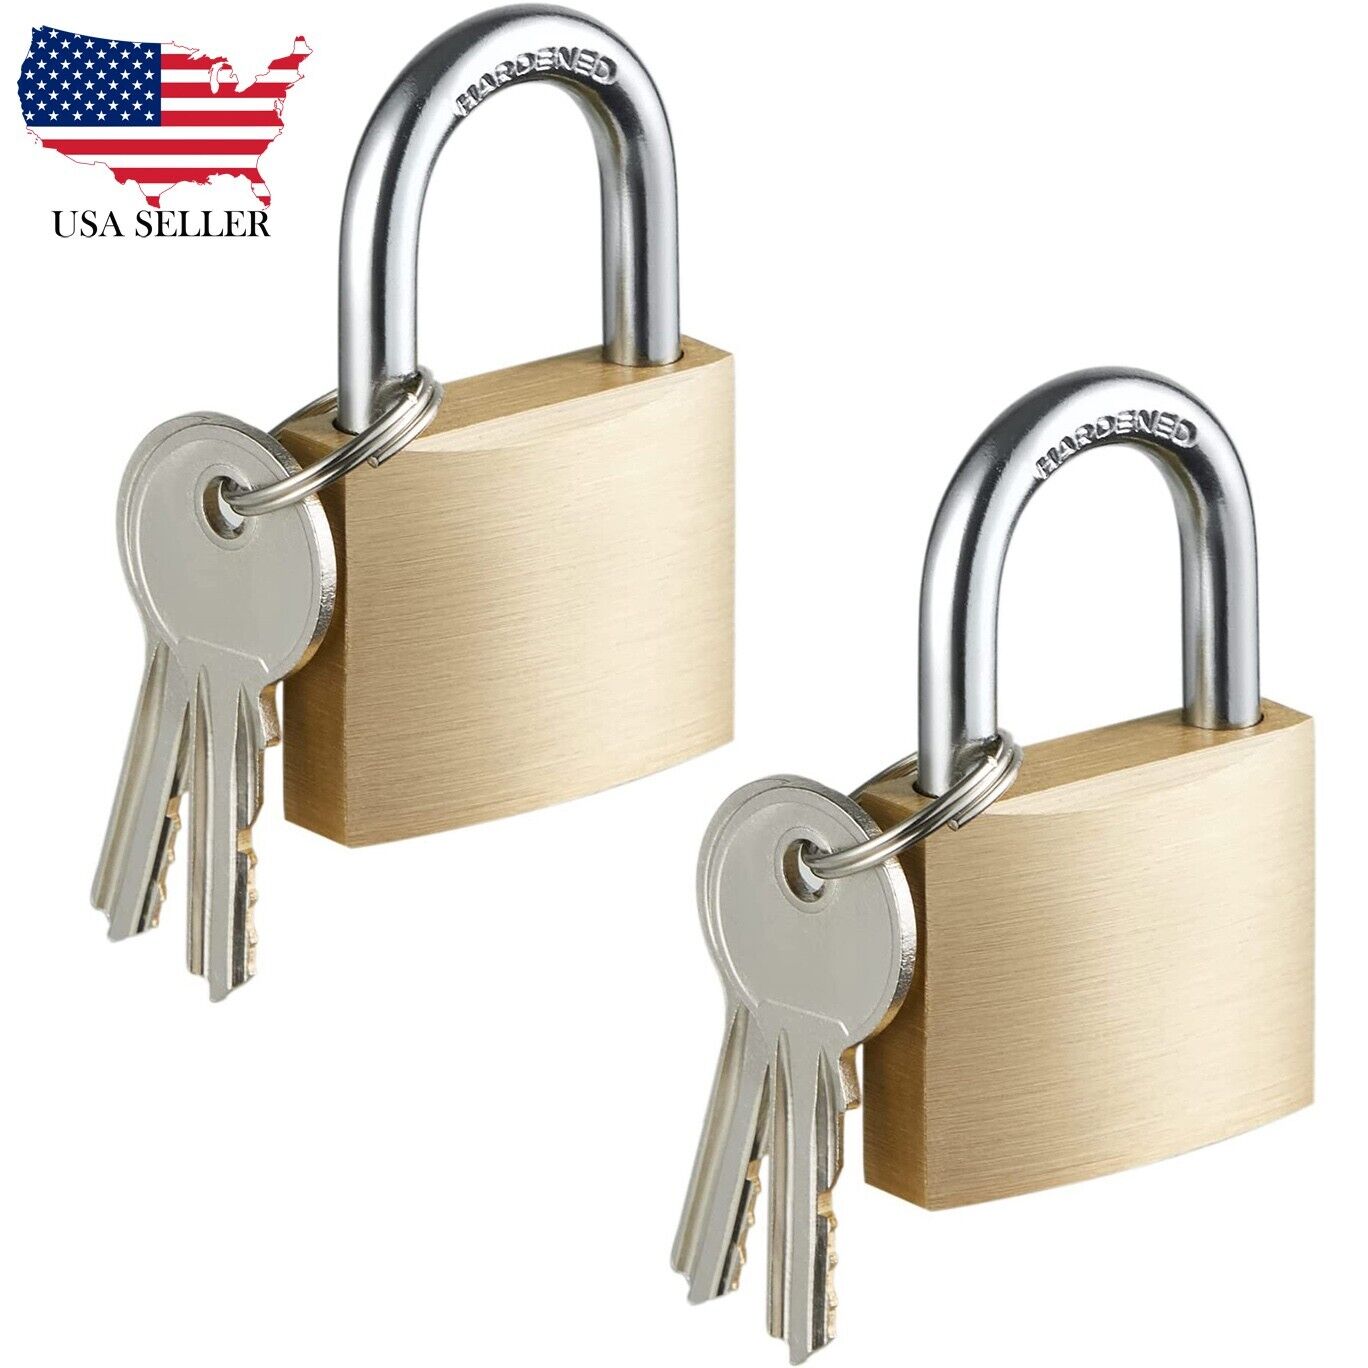 Solid Brass Padlock with Key, Pad Lock 1-1/2 in. Wide Lock Body, Locker (2 Pack)